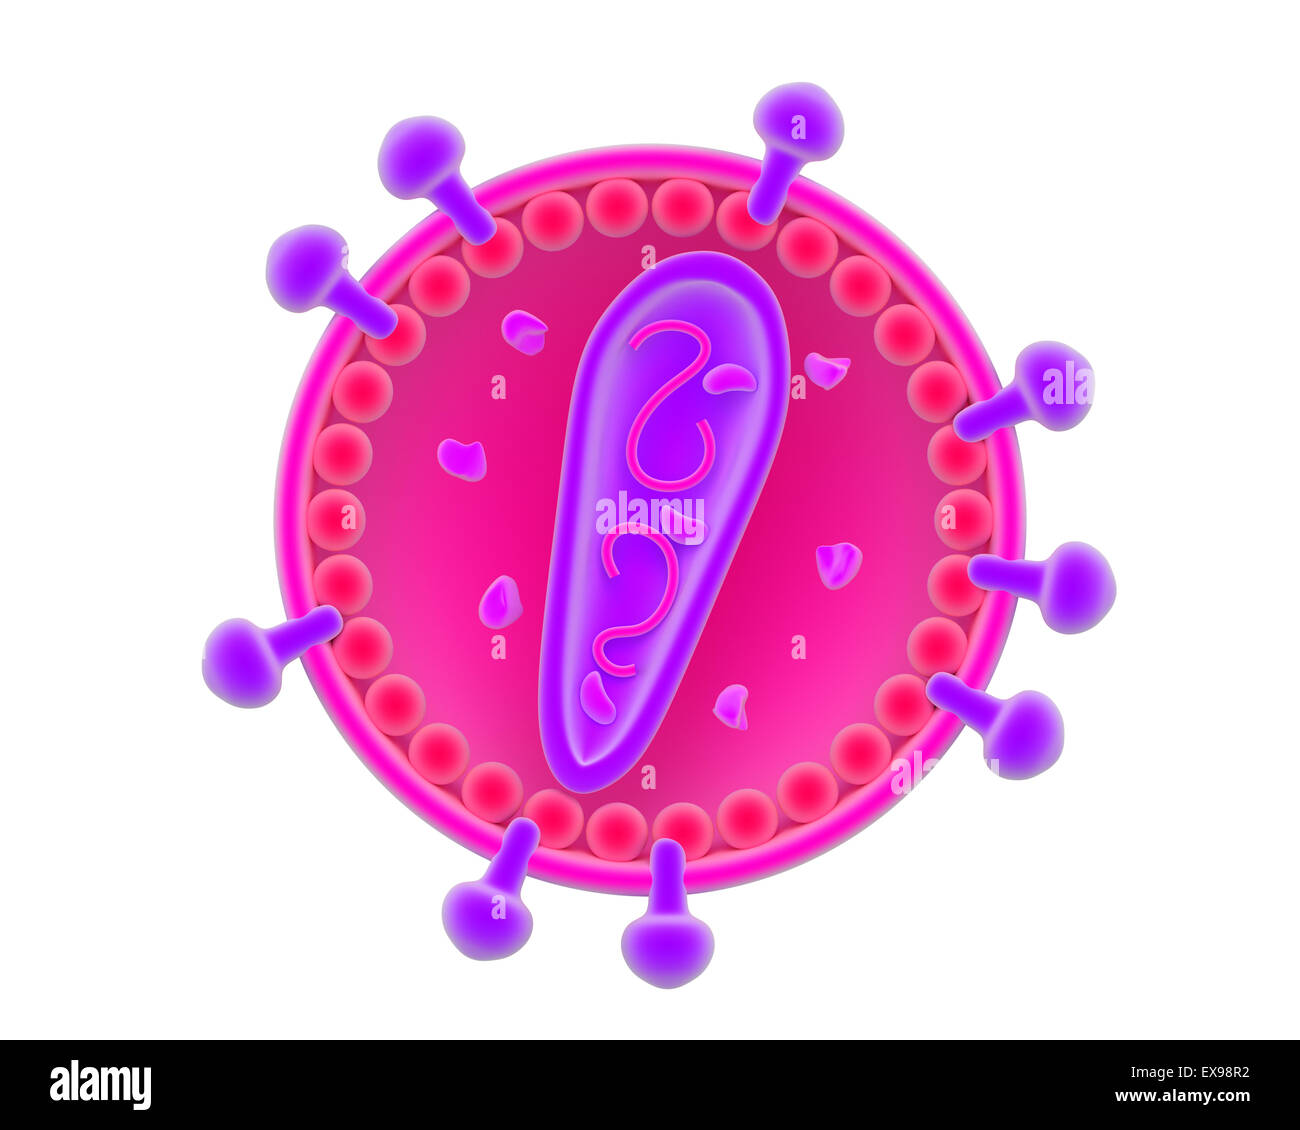 Illustration of a retrovirus virion. Stock Photo